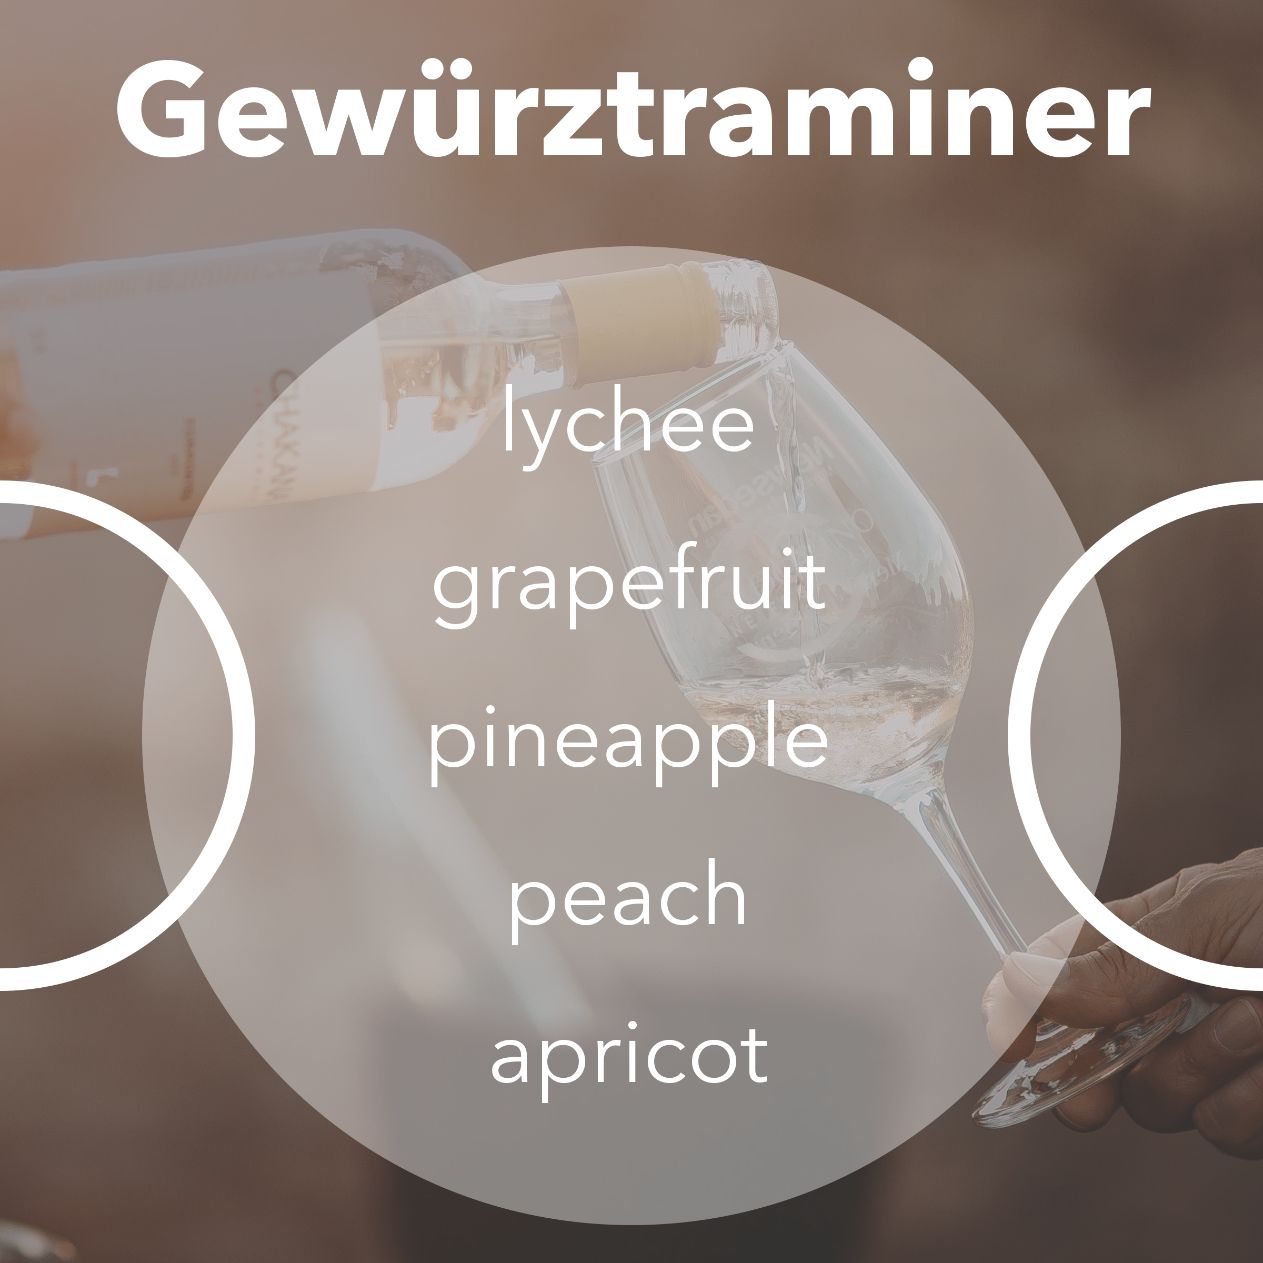 Gewurztraminer wine tasting notes.